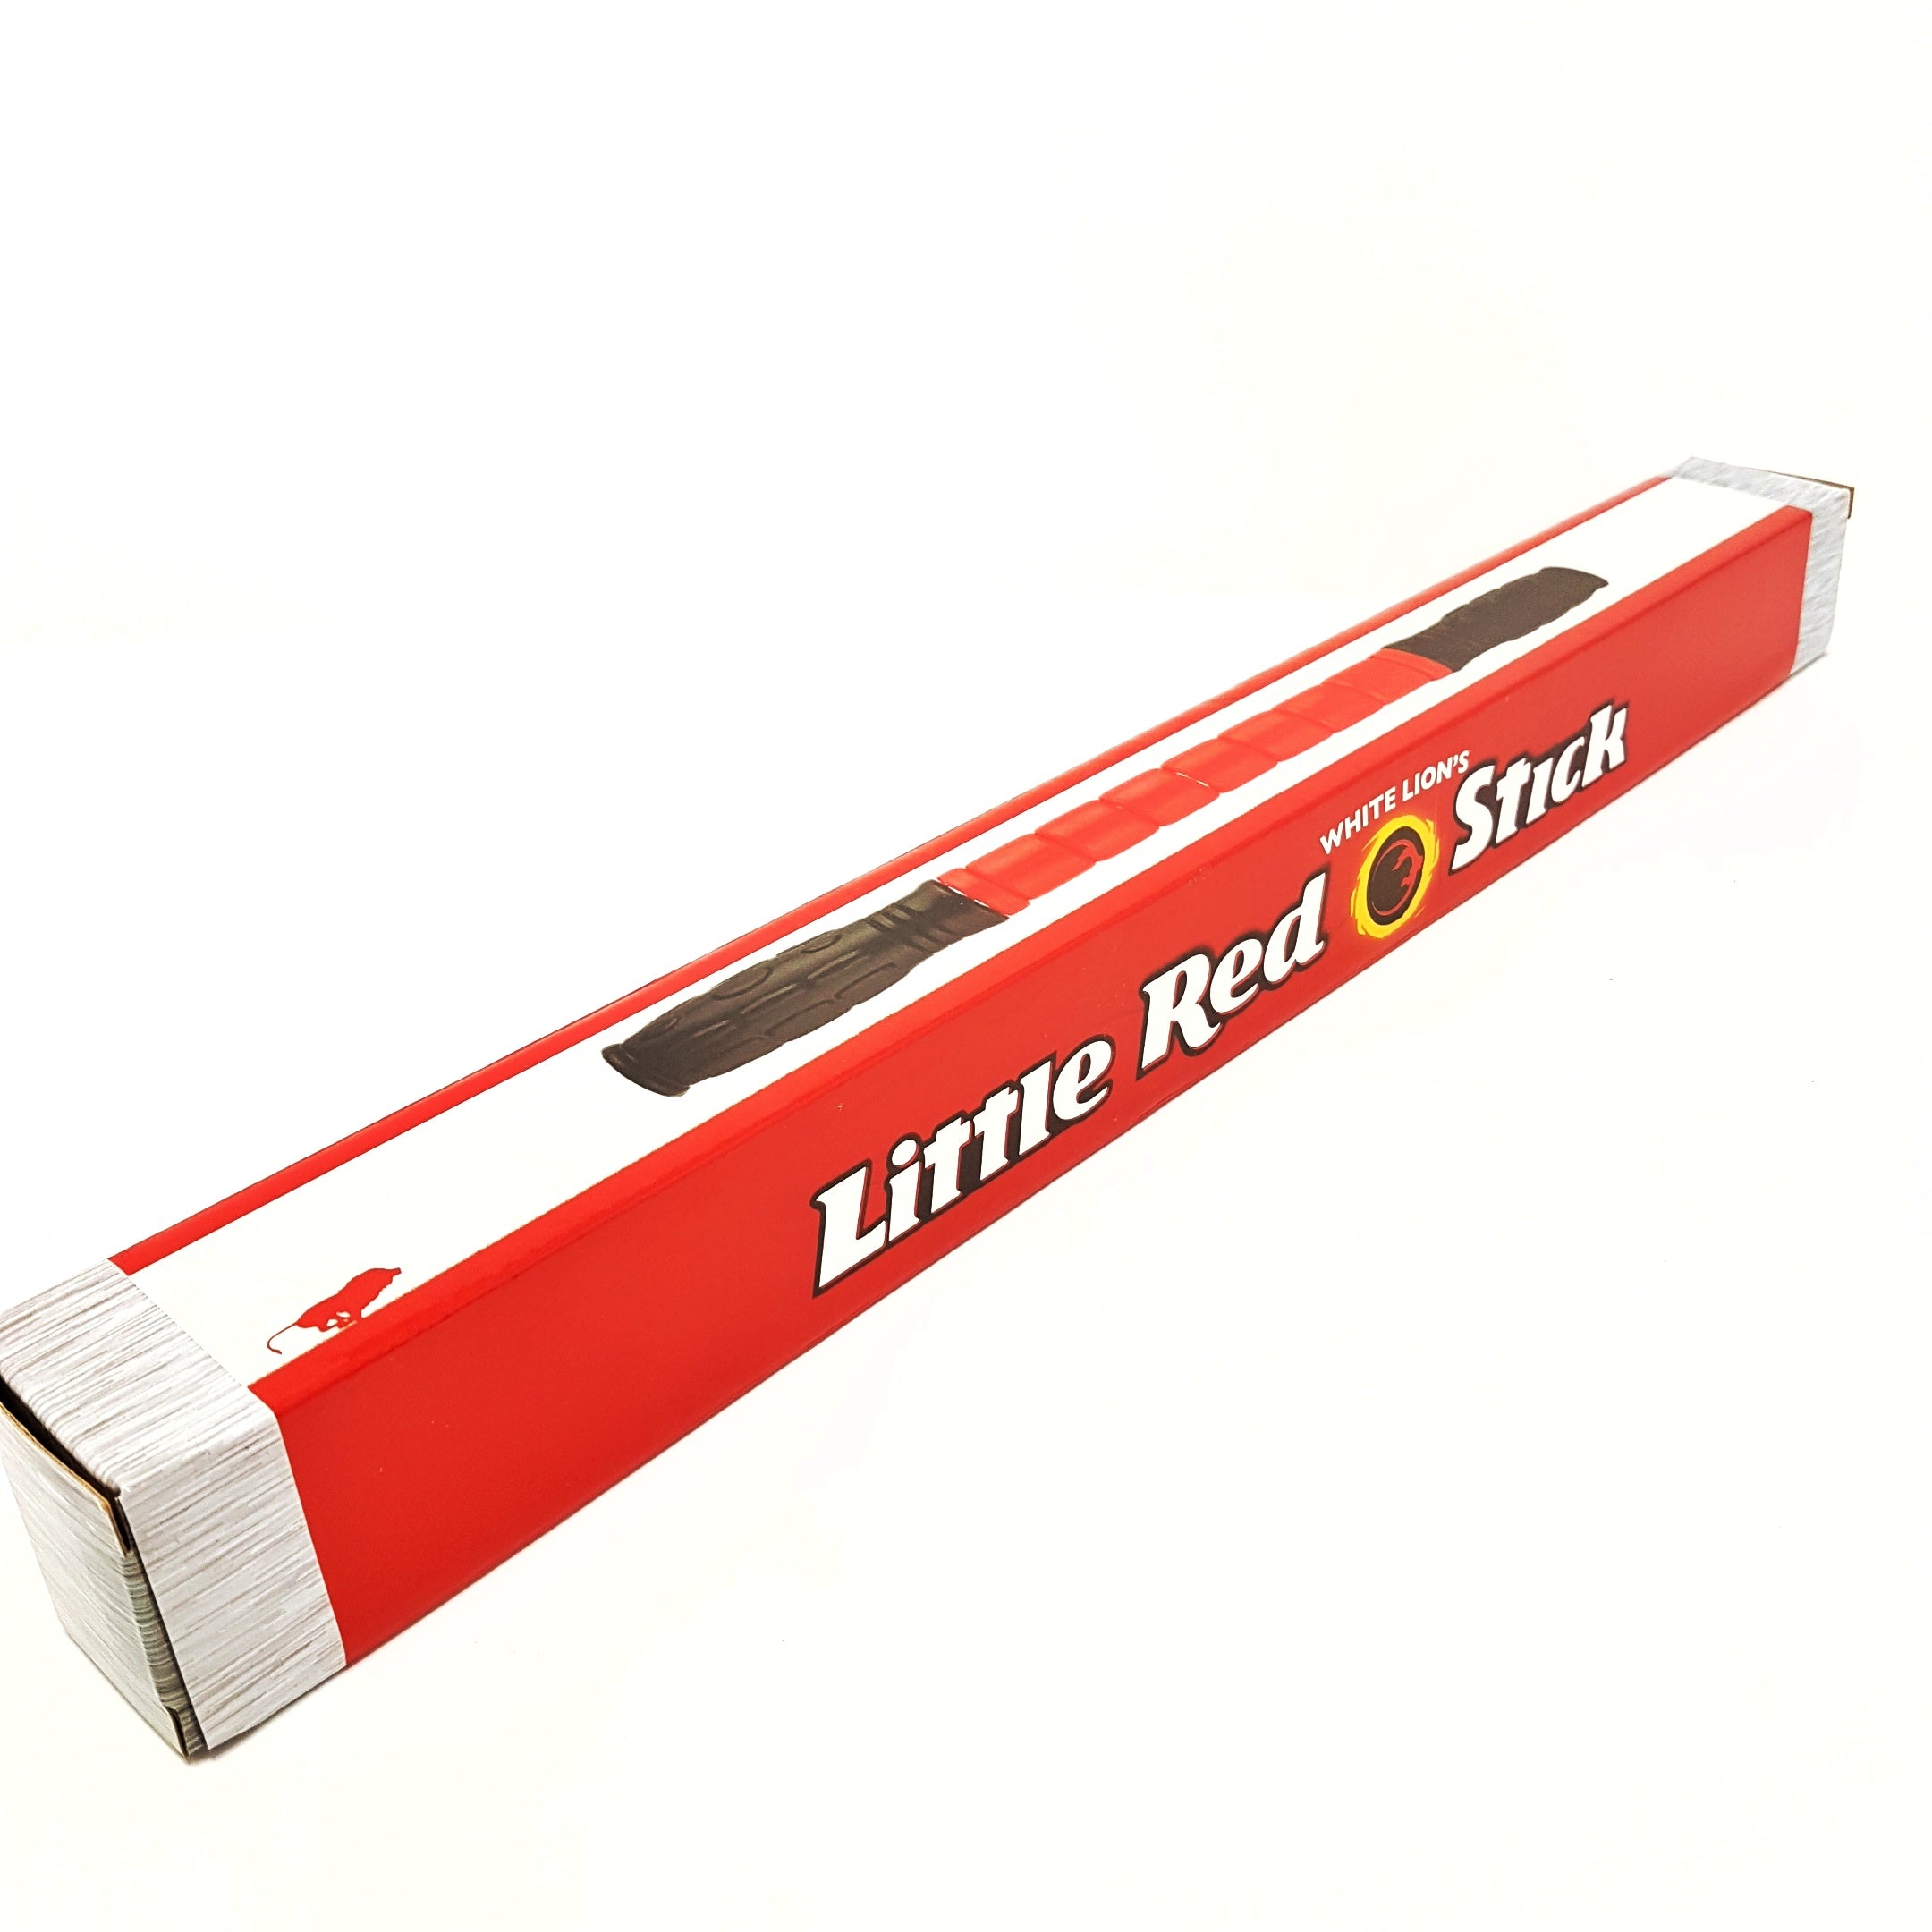 RedStick - it's a break stick | ACES